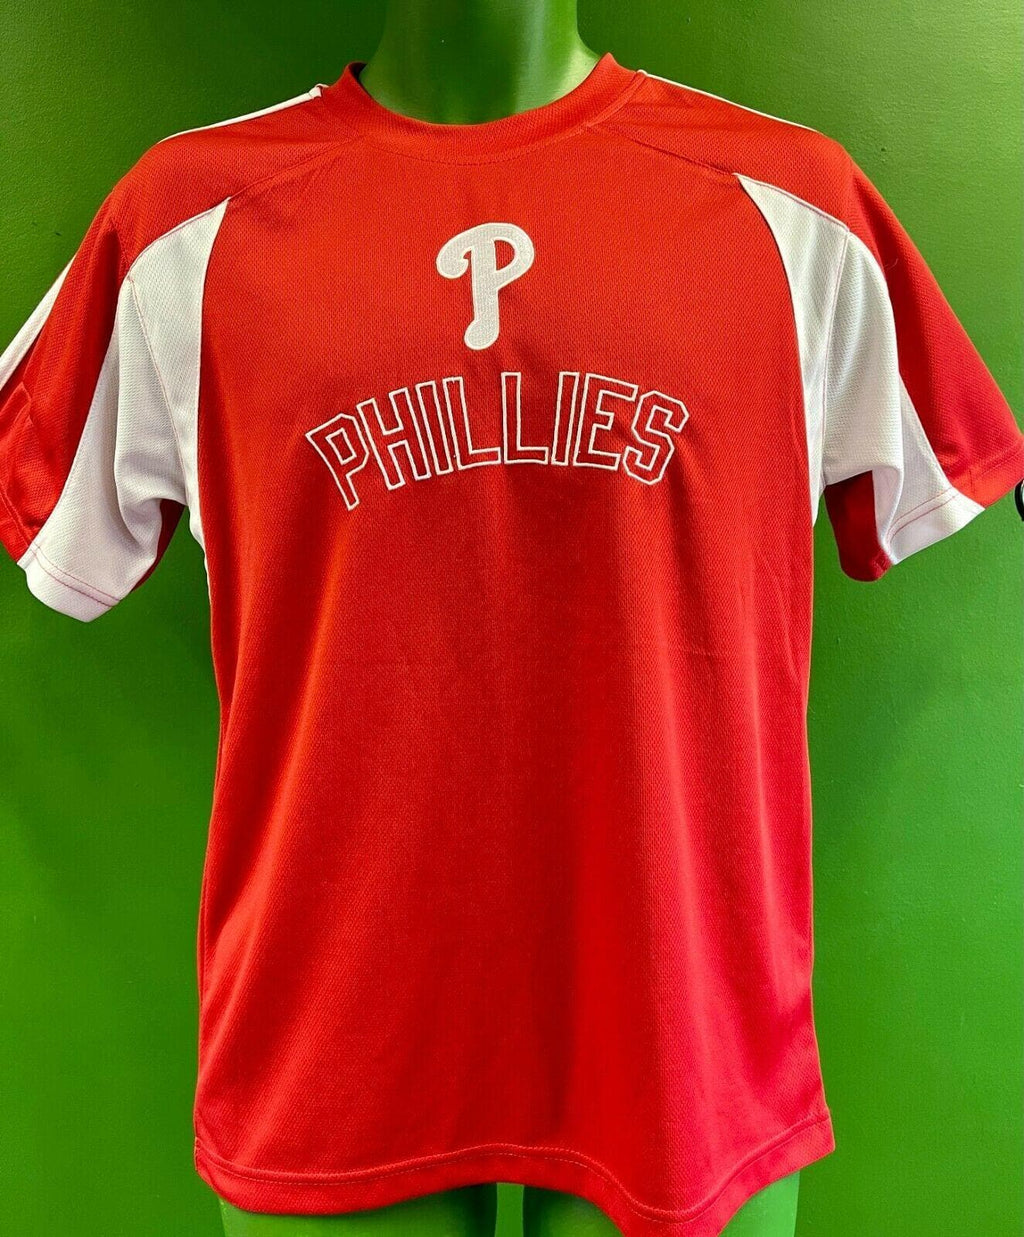 Philadelphia Phillies Youth Jersey Size XL 14/16 Red New MLB Team Athletics